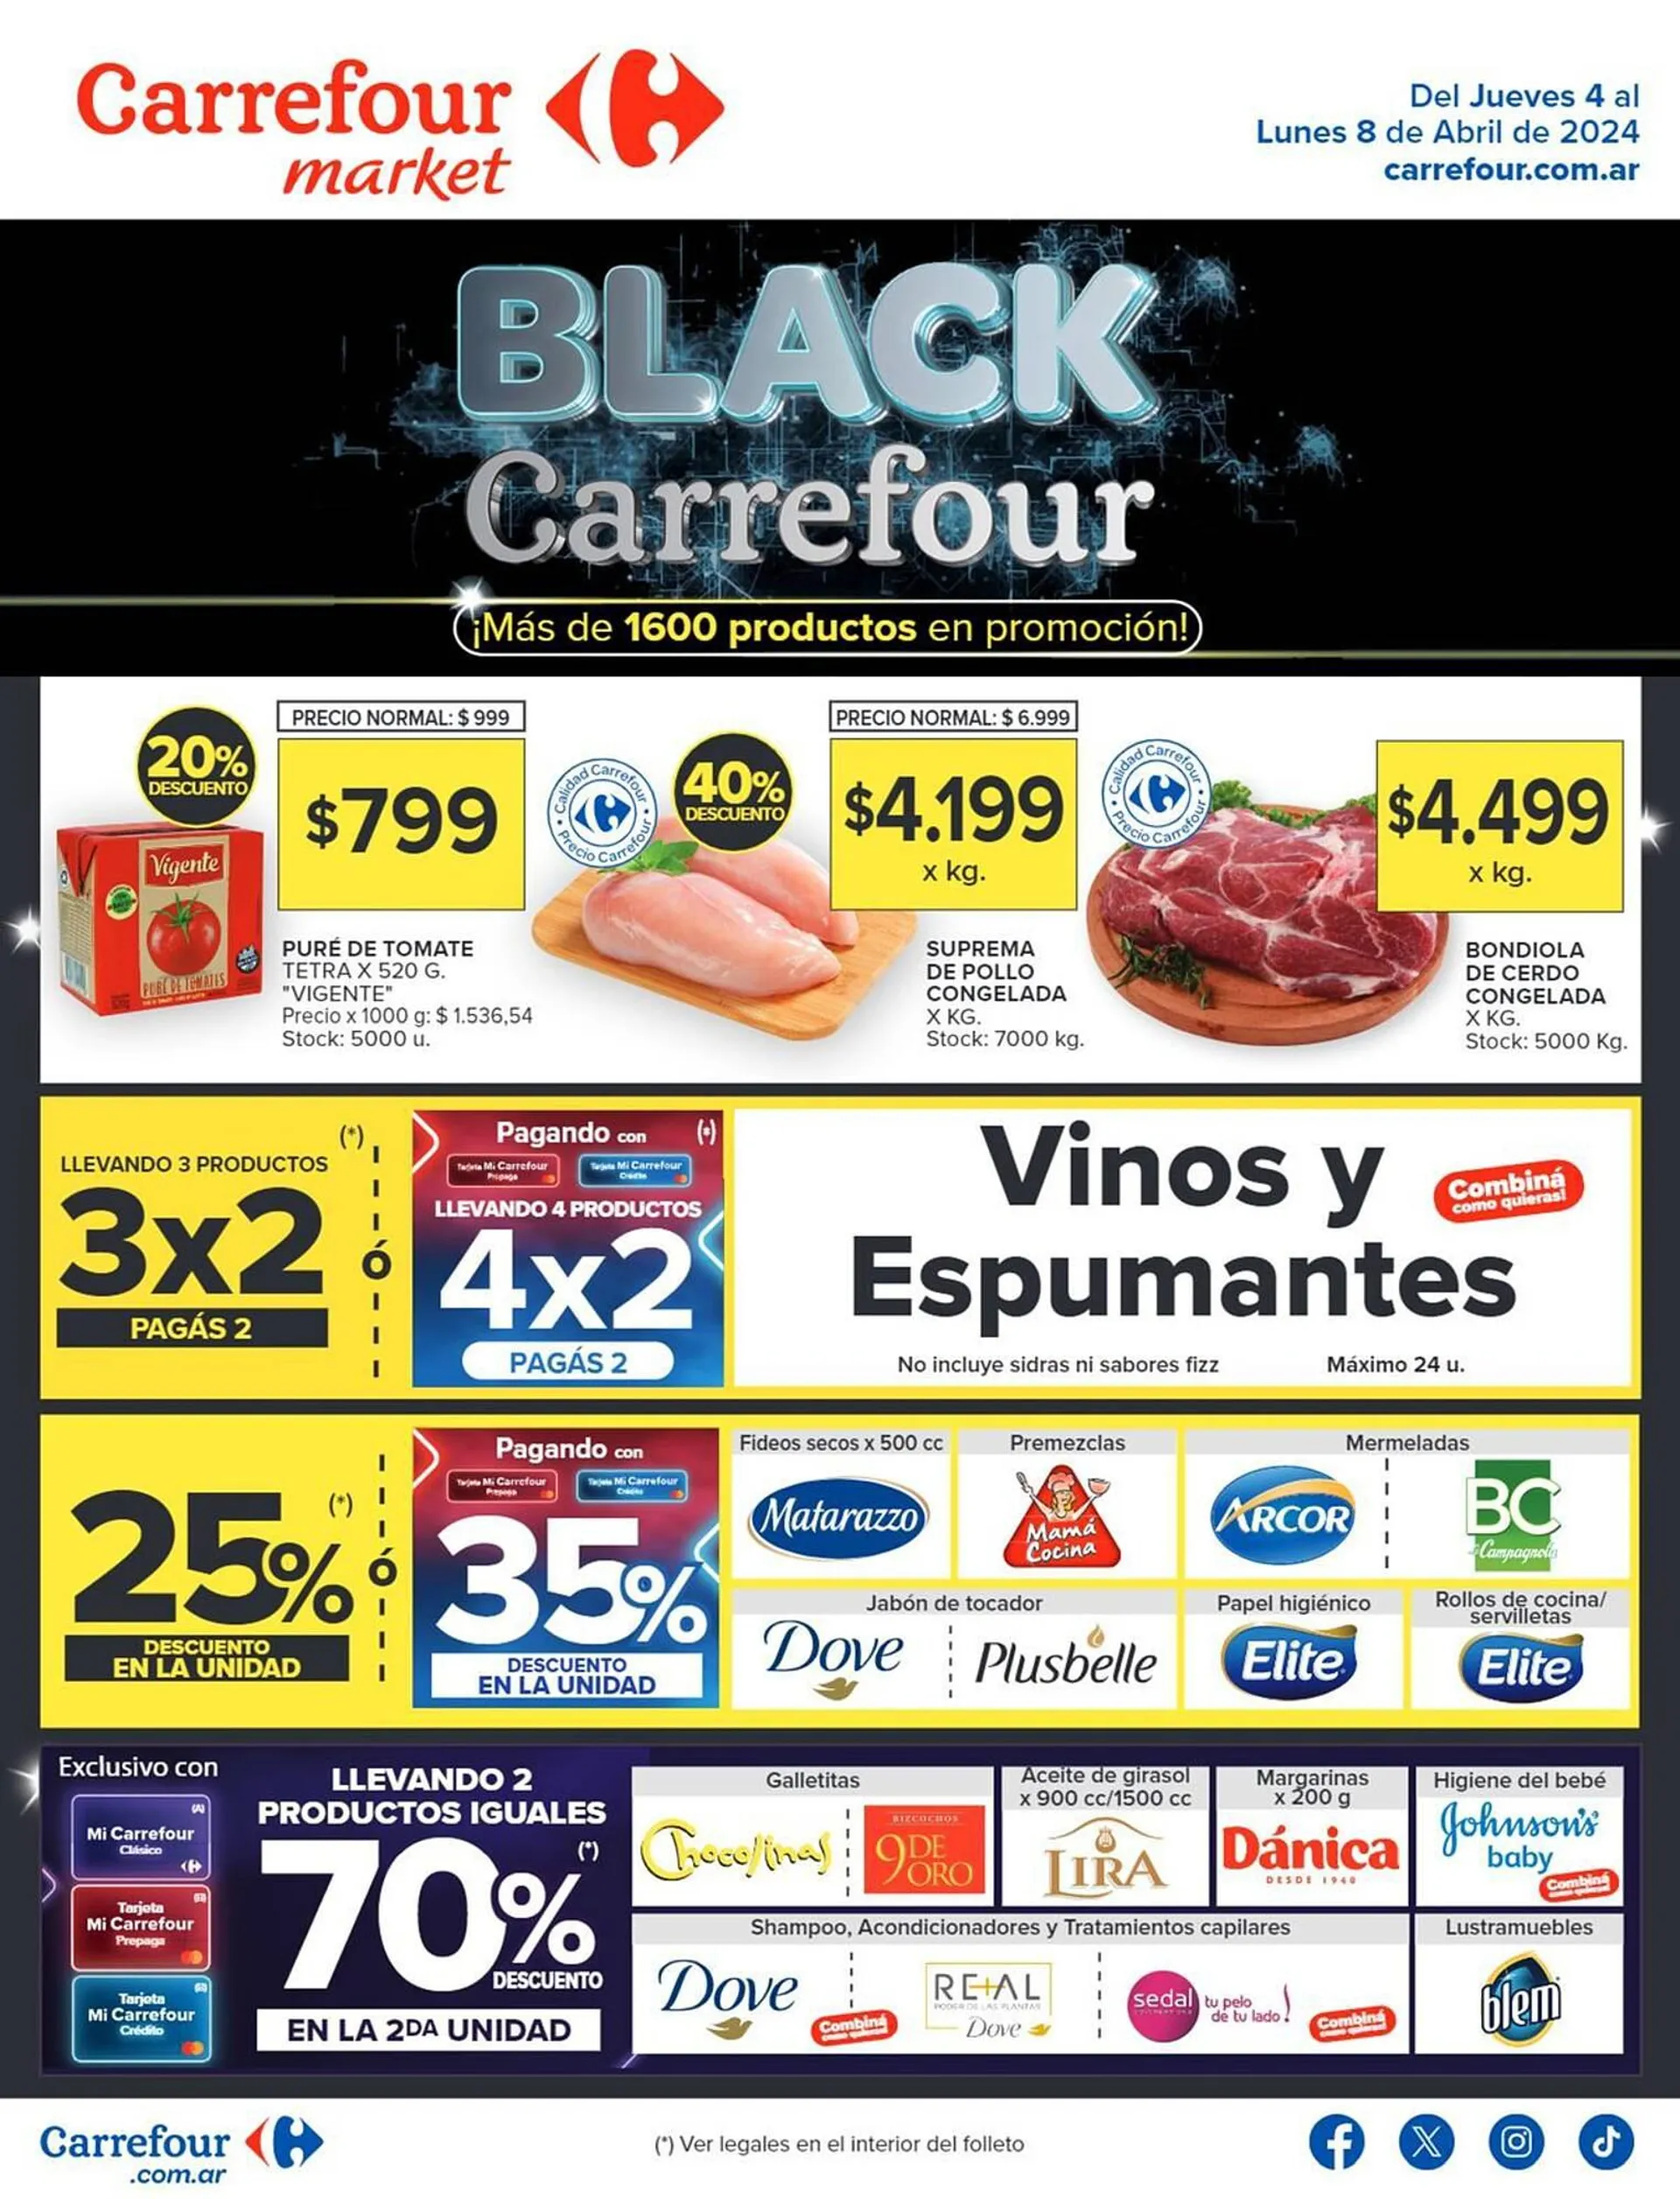 Ofertas de Catálogo Carrefour Market 4 de abril al 8 de abril 2024 - Página 1 del catálogo